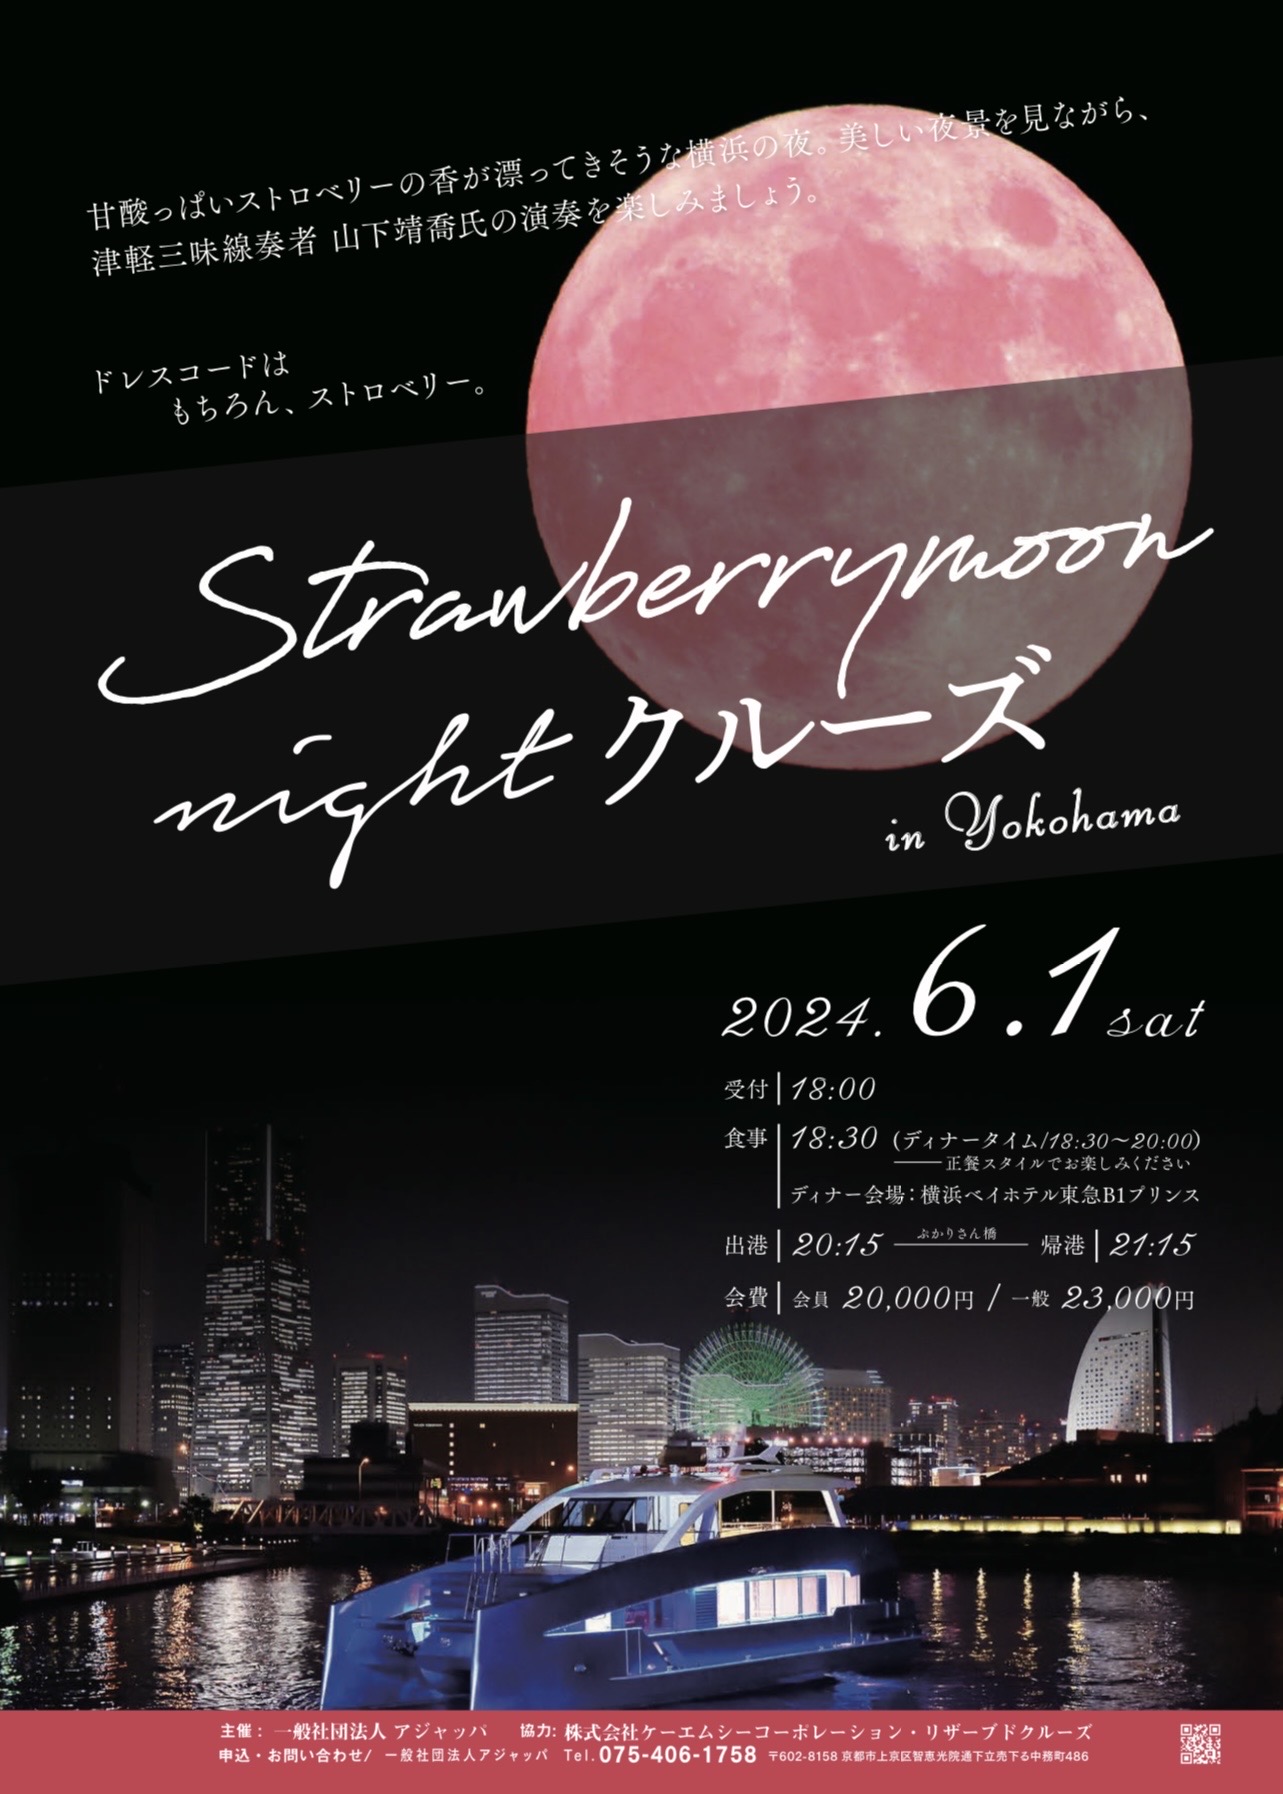 Strawberrymoon night クルーズ